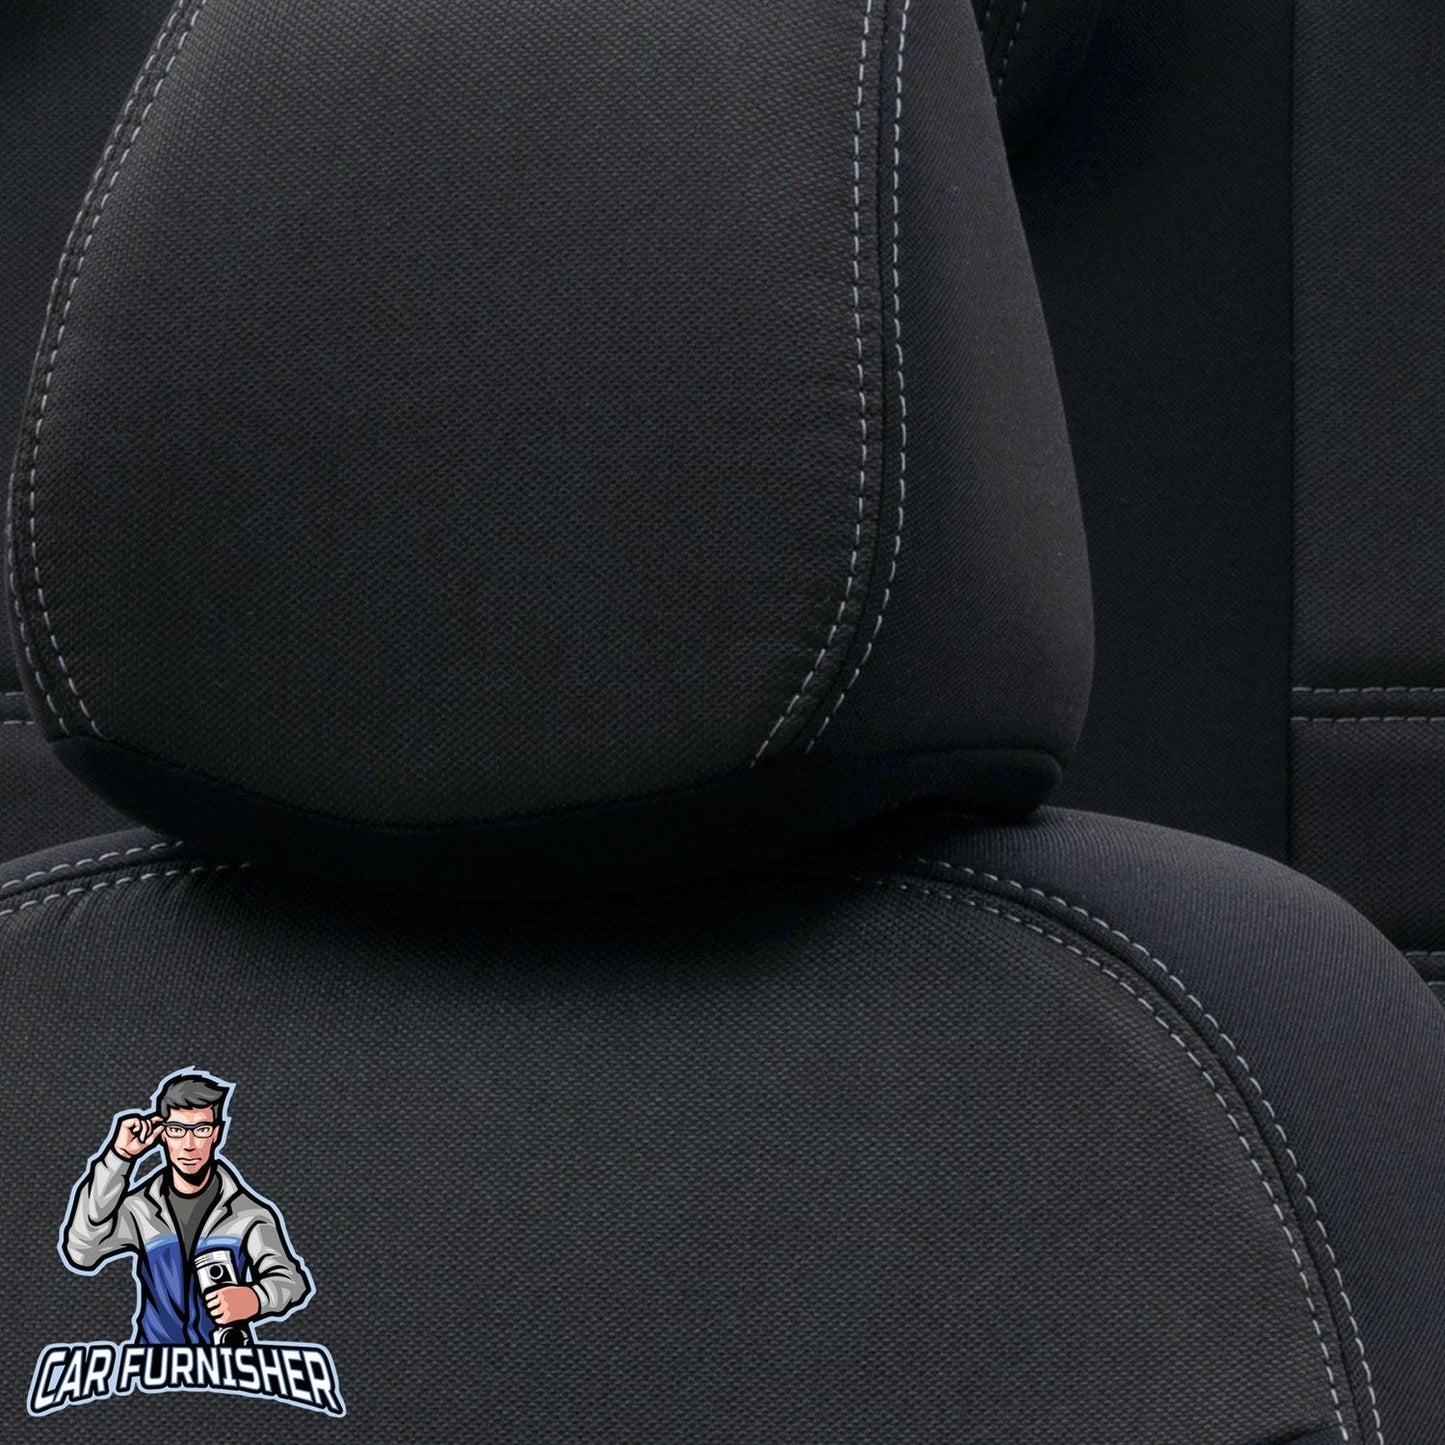 Mercedes E Class Seat Covers Original Jacquard Design Black Jacquard Fabric